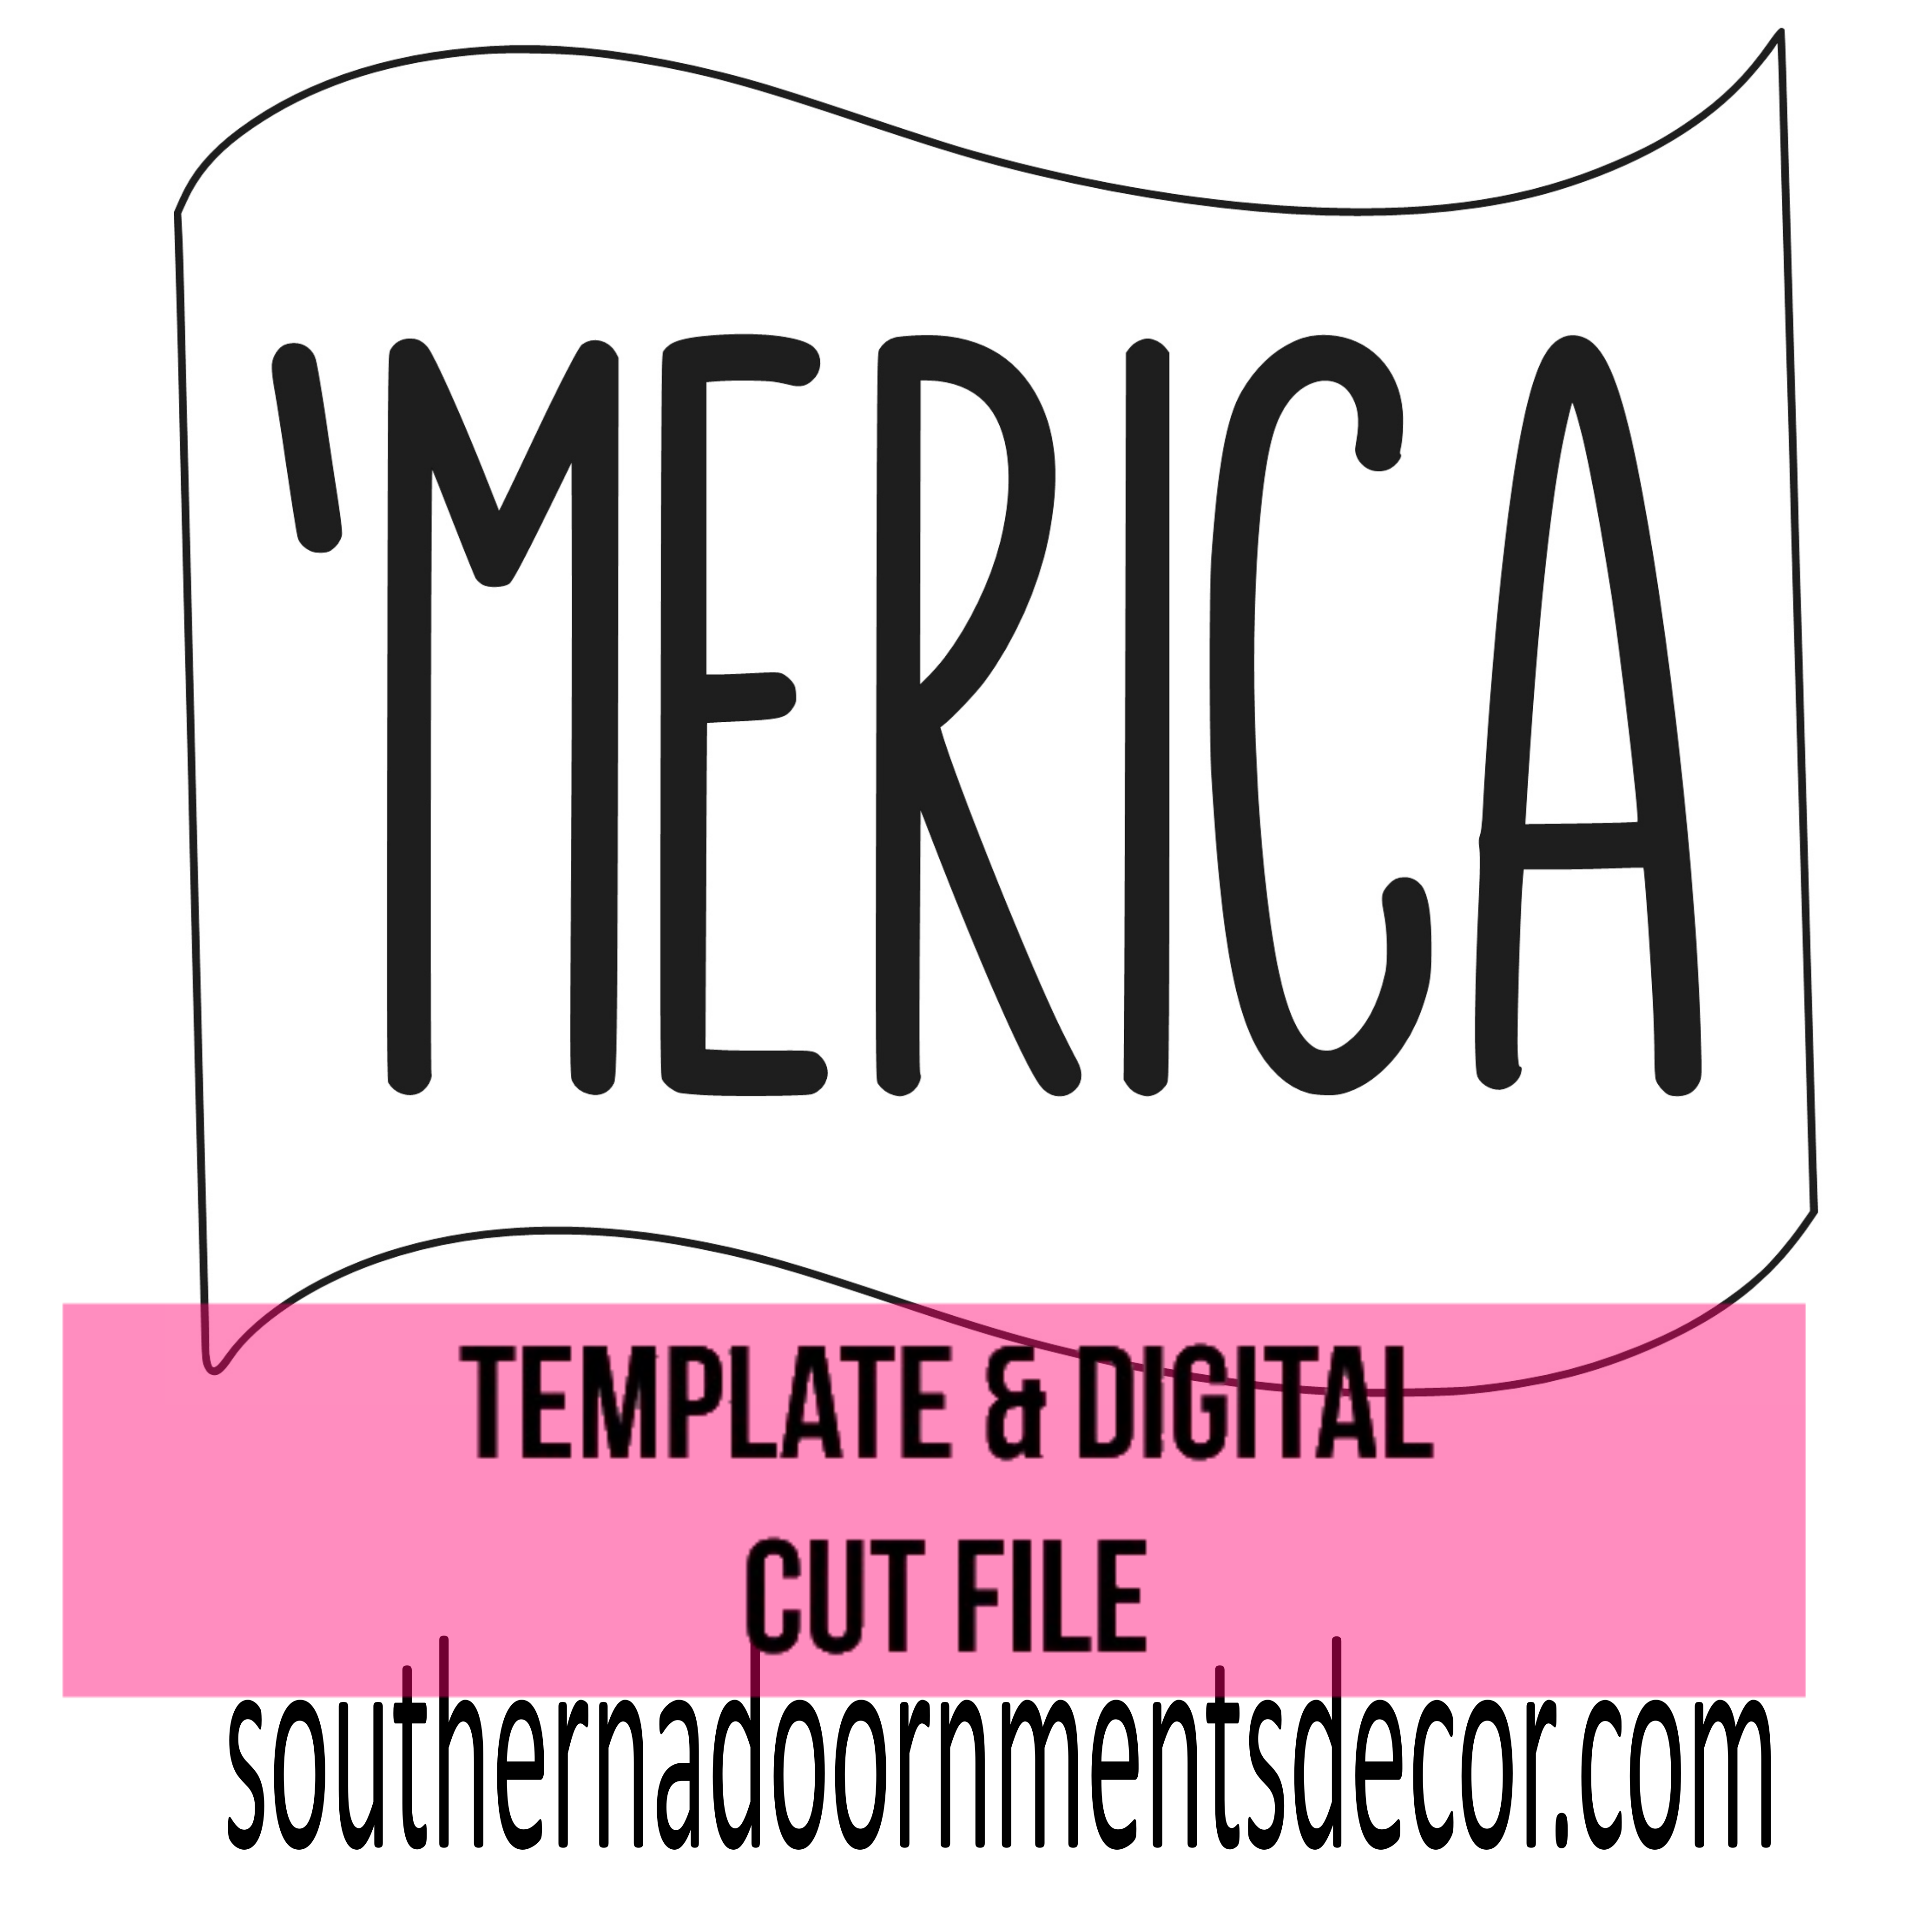 'Merica Flag Template & Digital Cut File